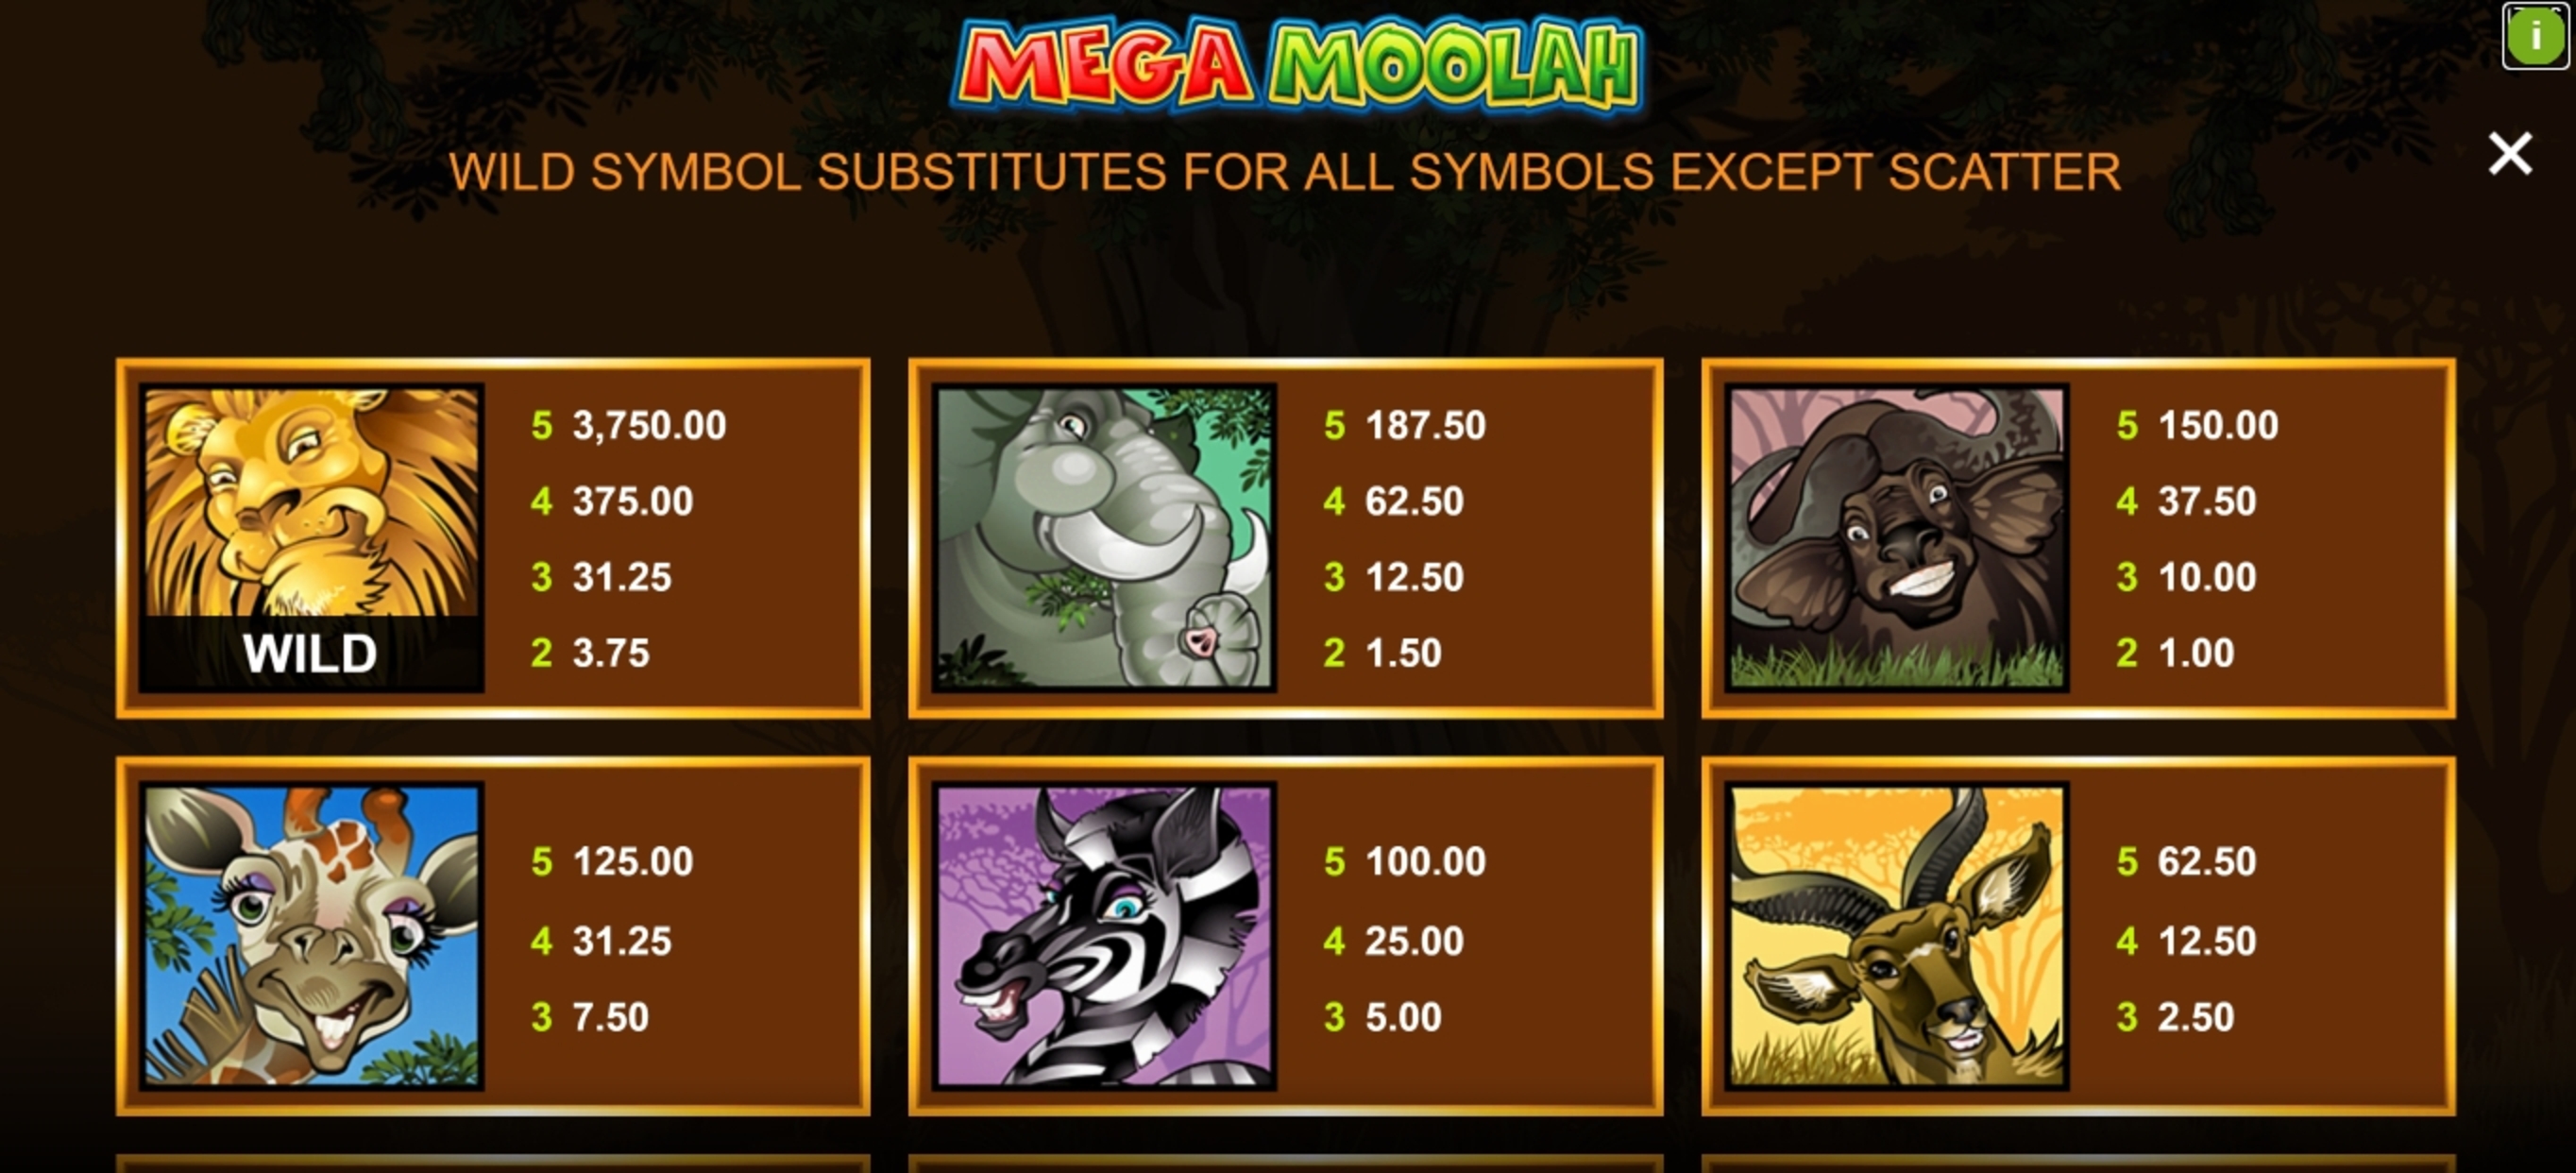 Info of Mega Moolah Slot Game by Microgaming